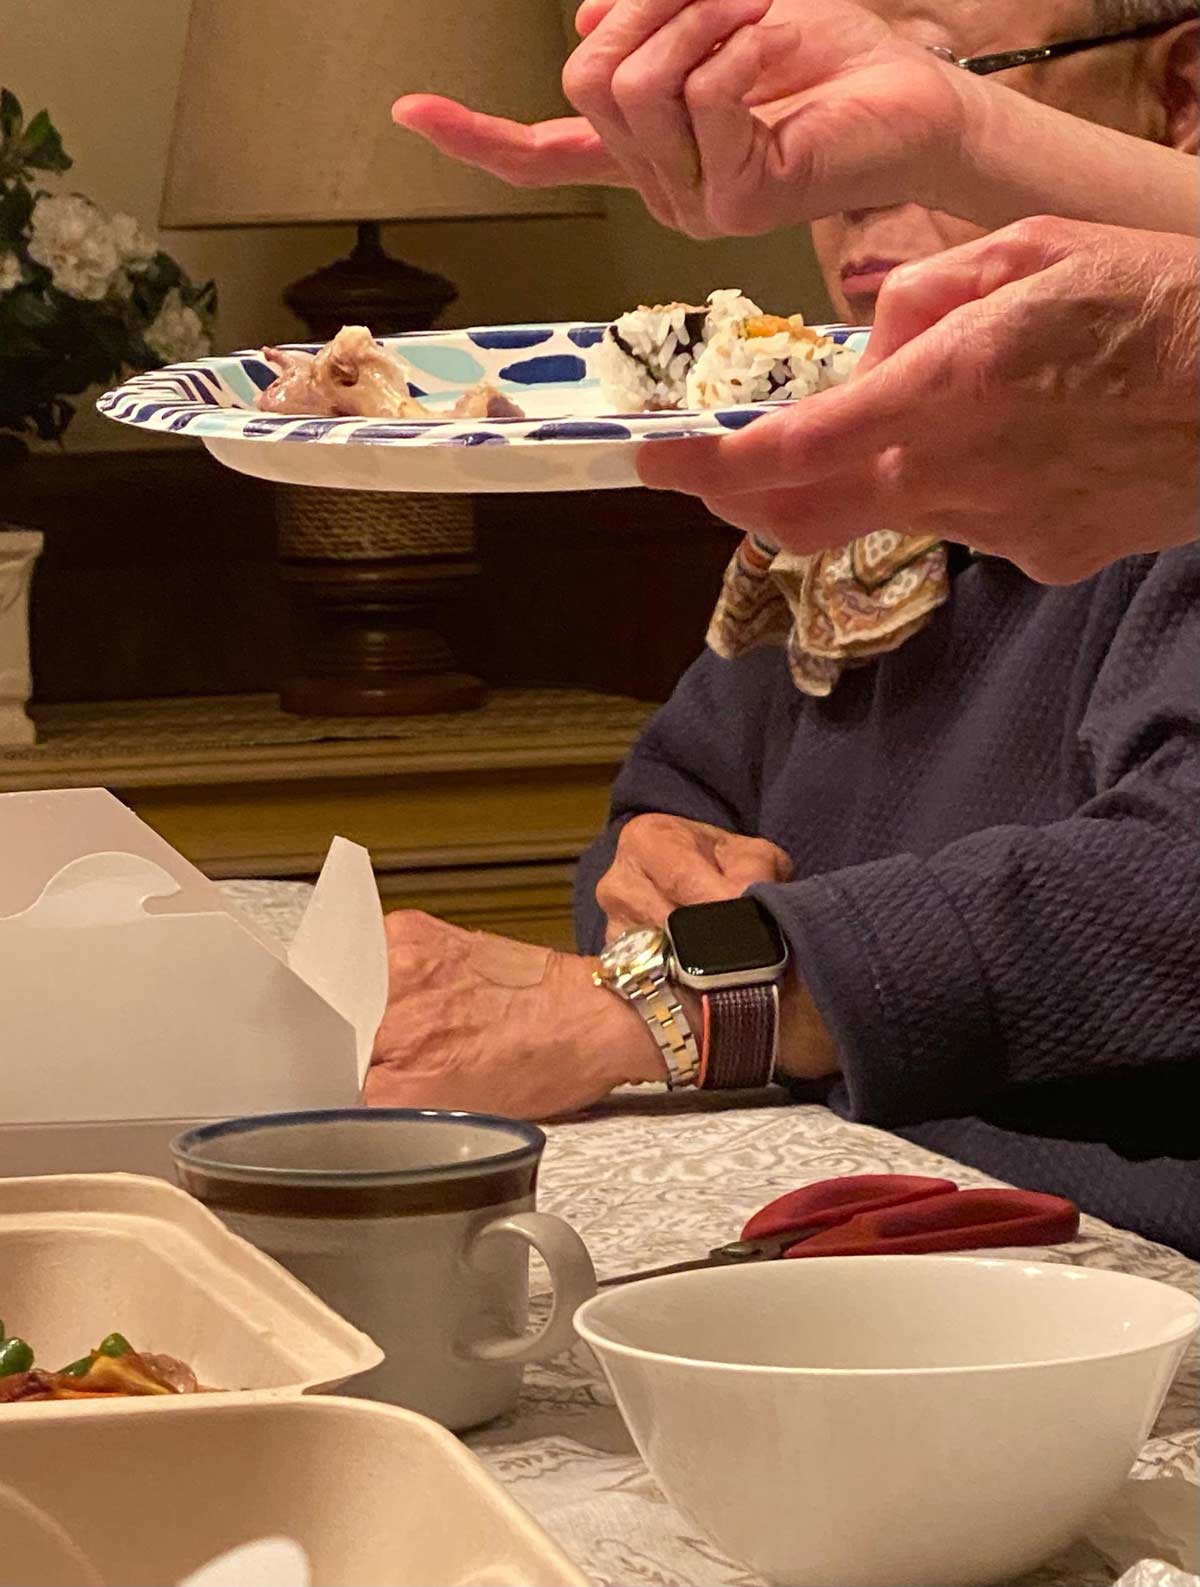 Grandma got an Apple watch but still insistent on sporting the Rolex